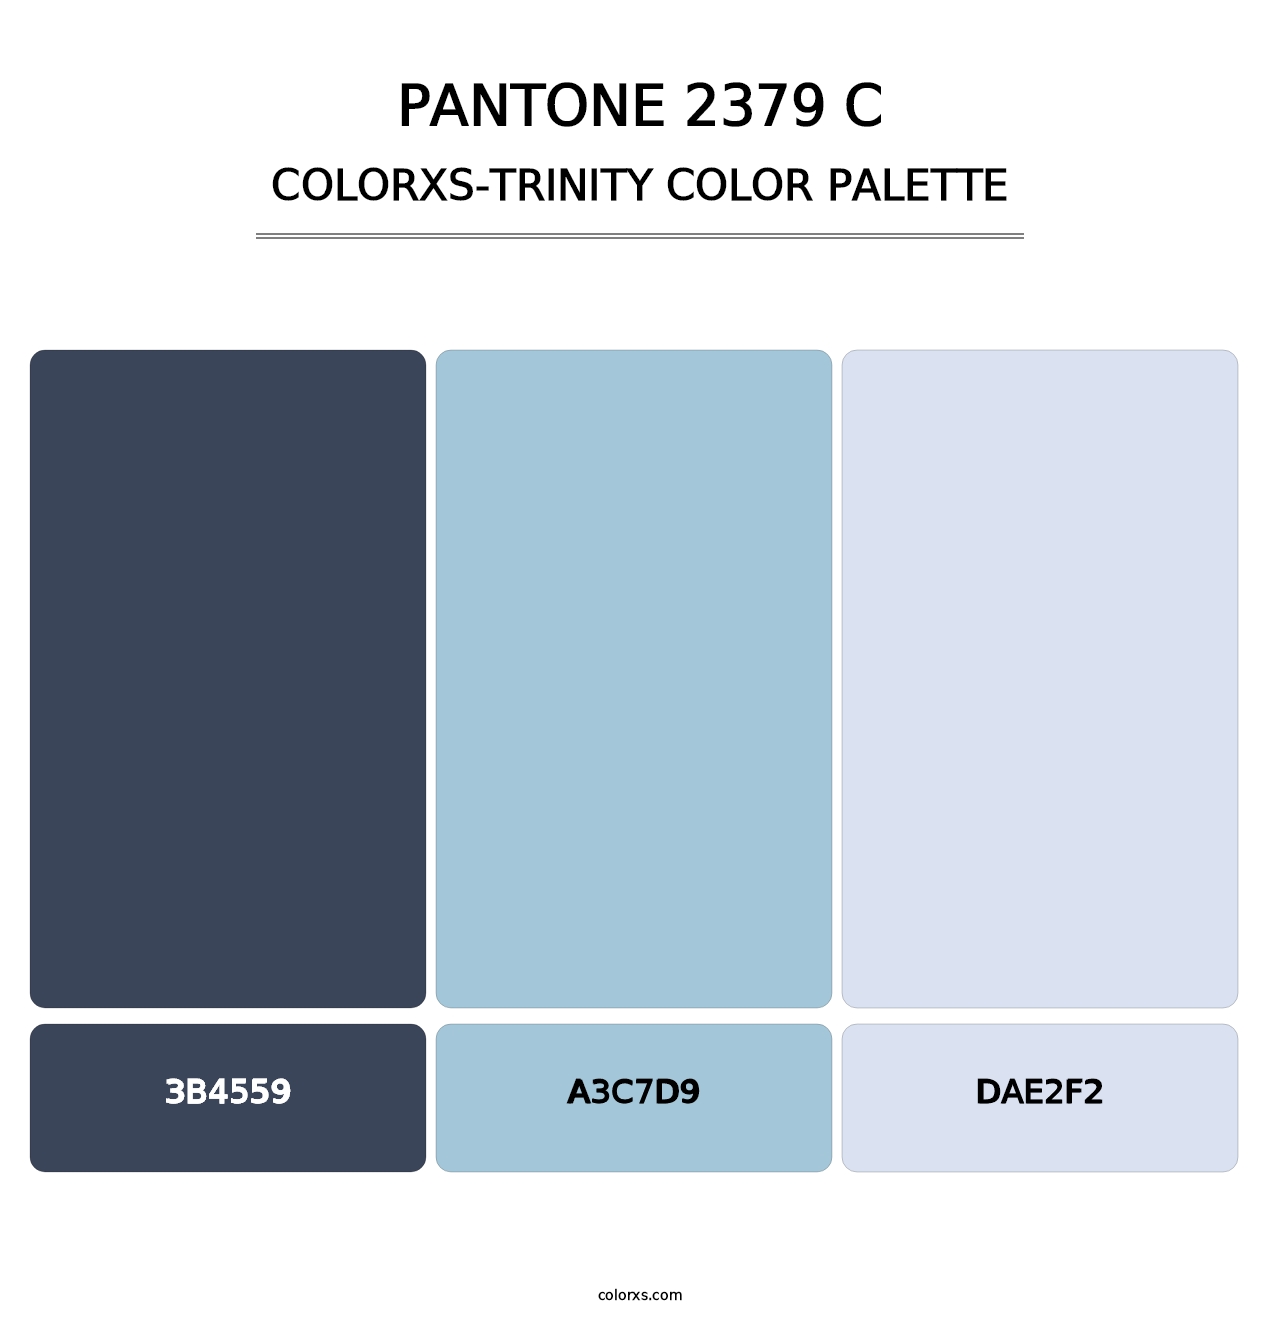 PANTONE 2379 C - Colorxs Trinity Palette